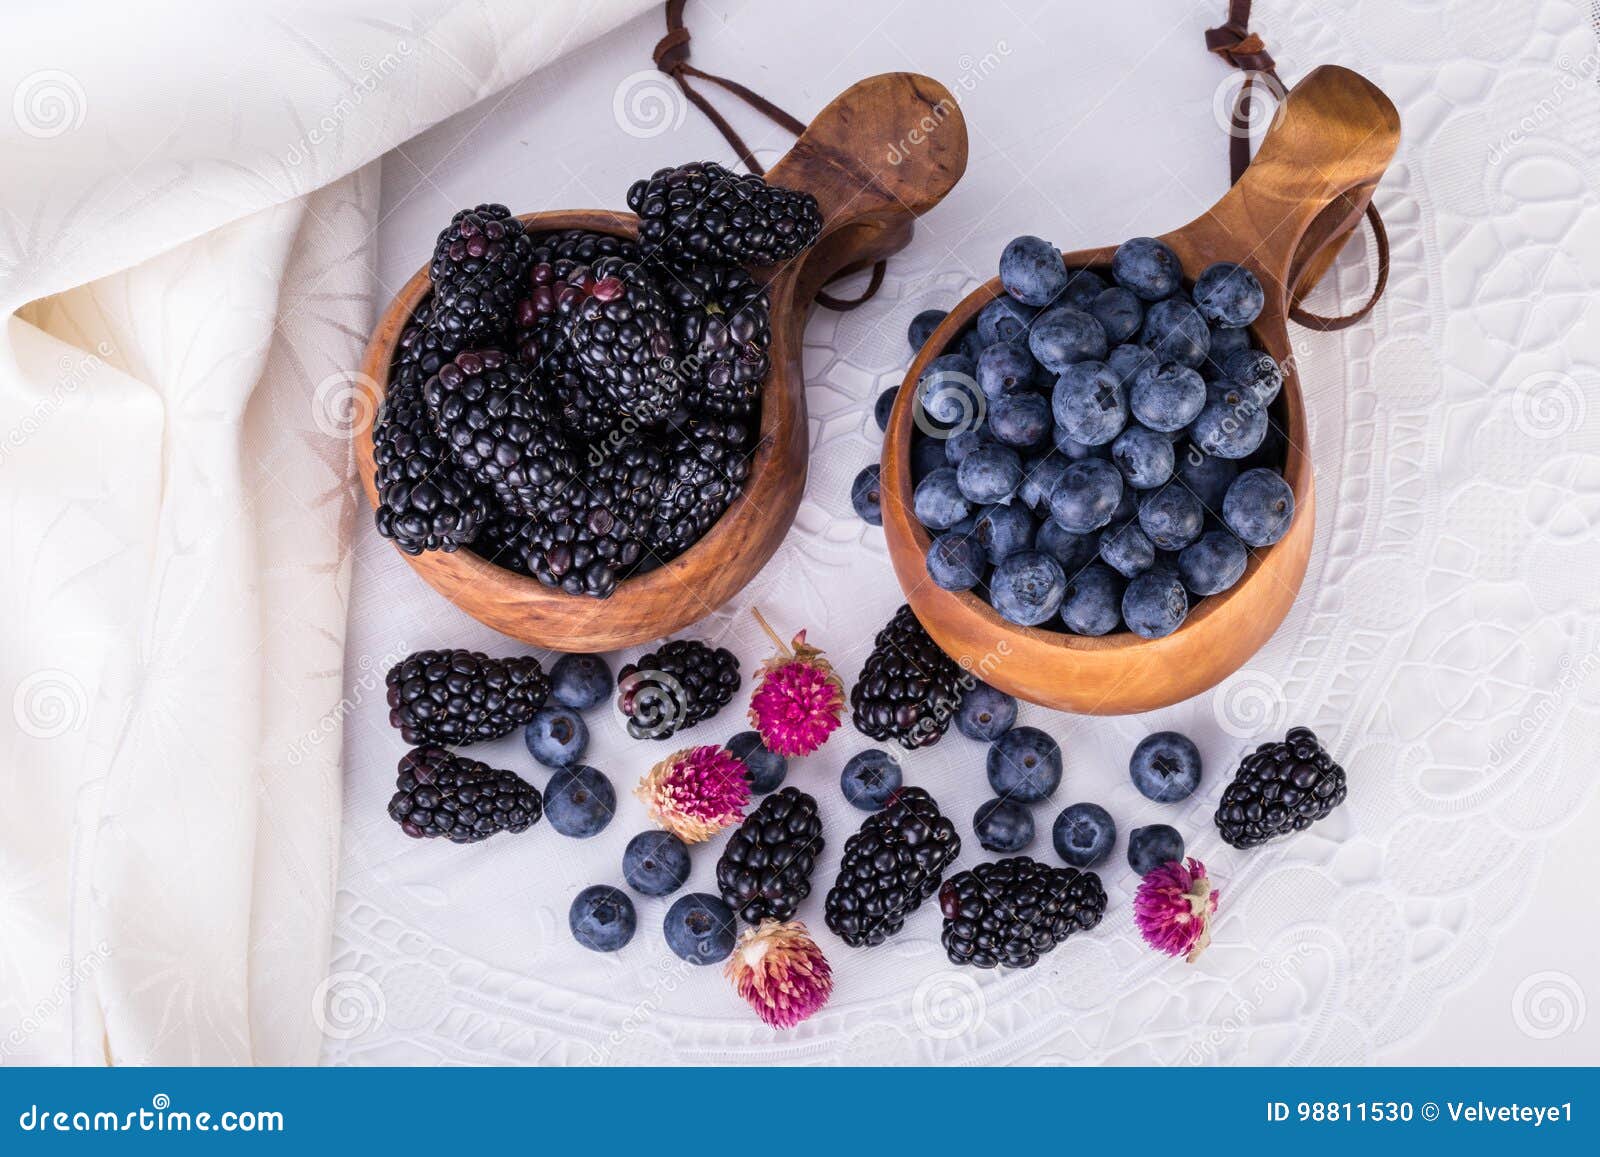 https://thumbs.dreamstime.com/z/piles-blueberries-blackberries-kuksa-ancient-lapland-f-finland-finnish-food-culture-98811530.jpg